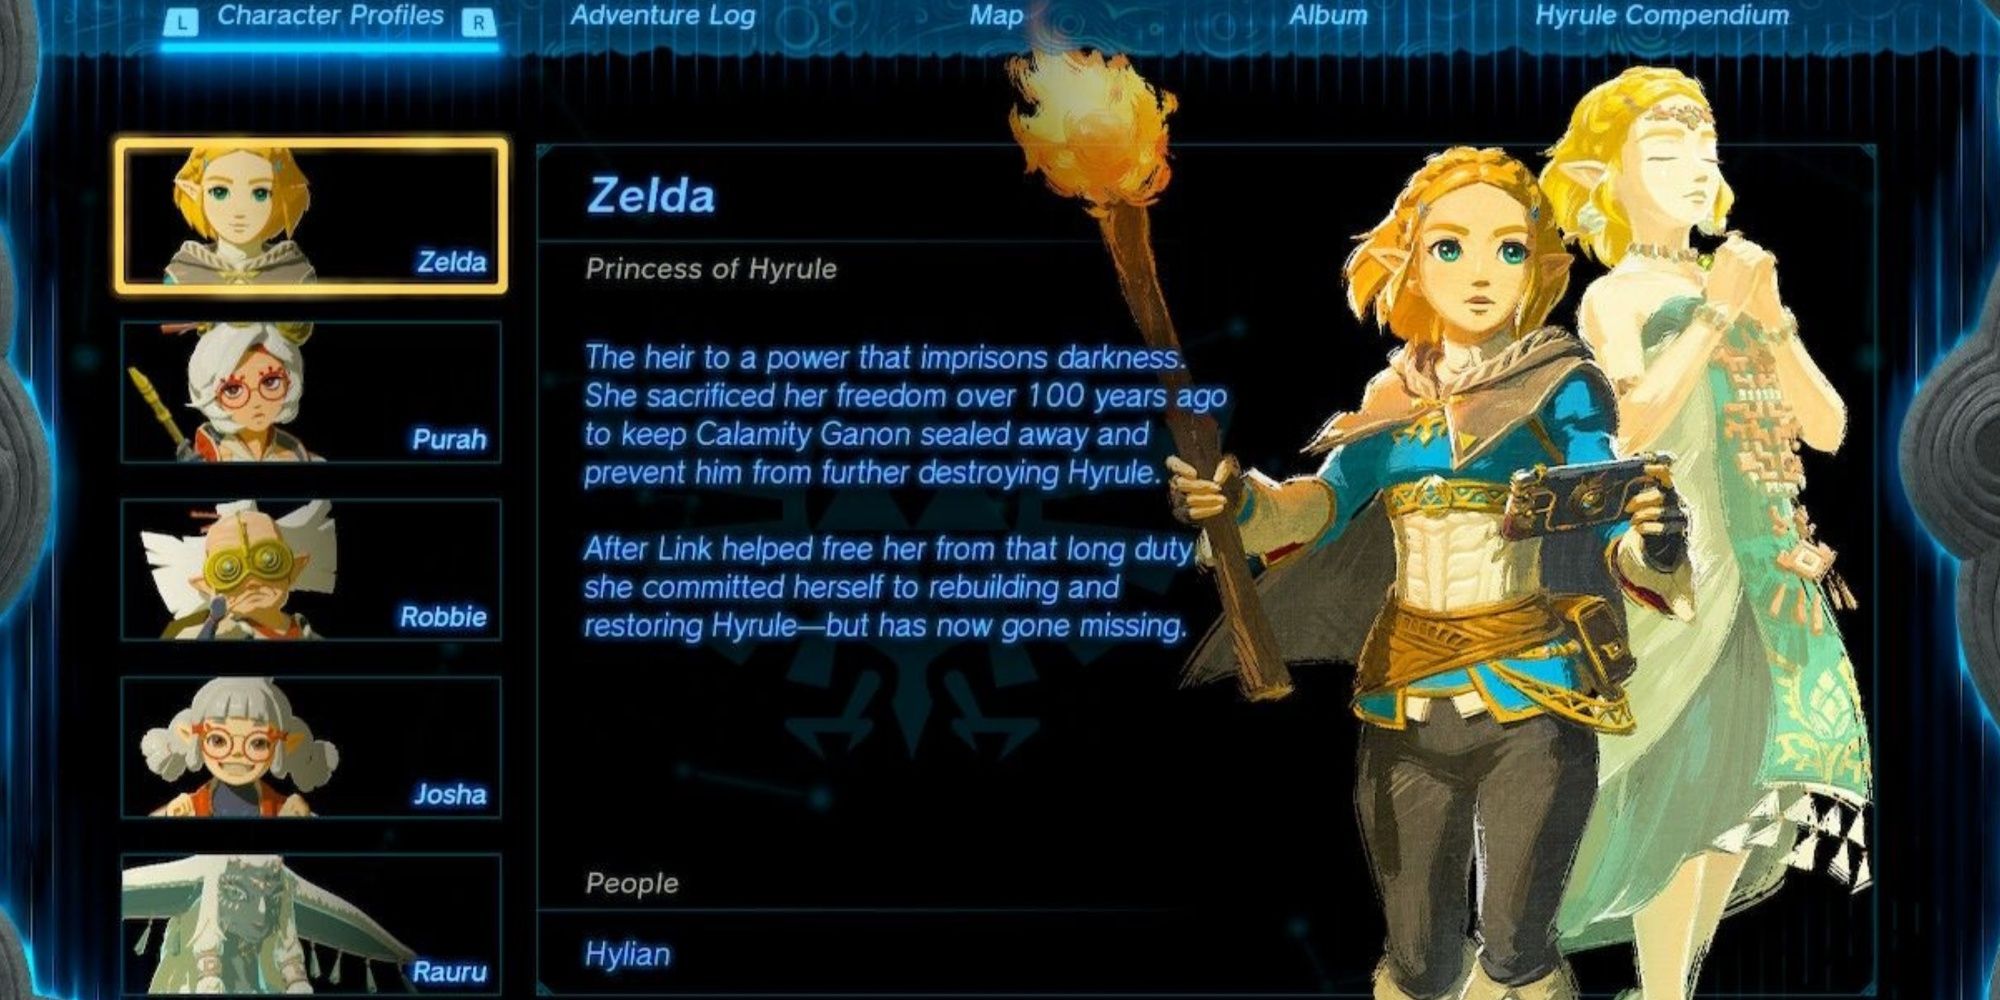 Zelda Description in the Character Profile menu in The Legend Of Zelda: Tears Of The Kingdom.